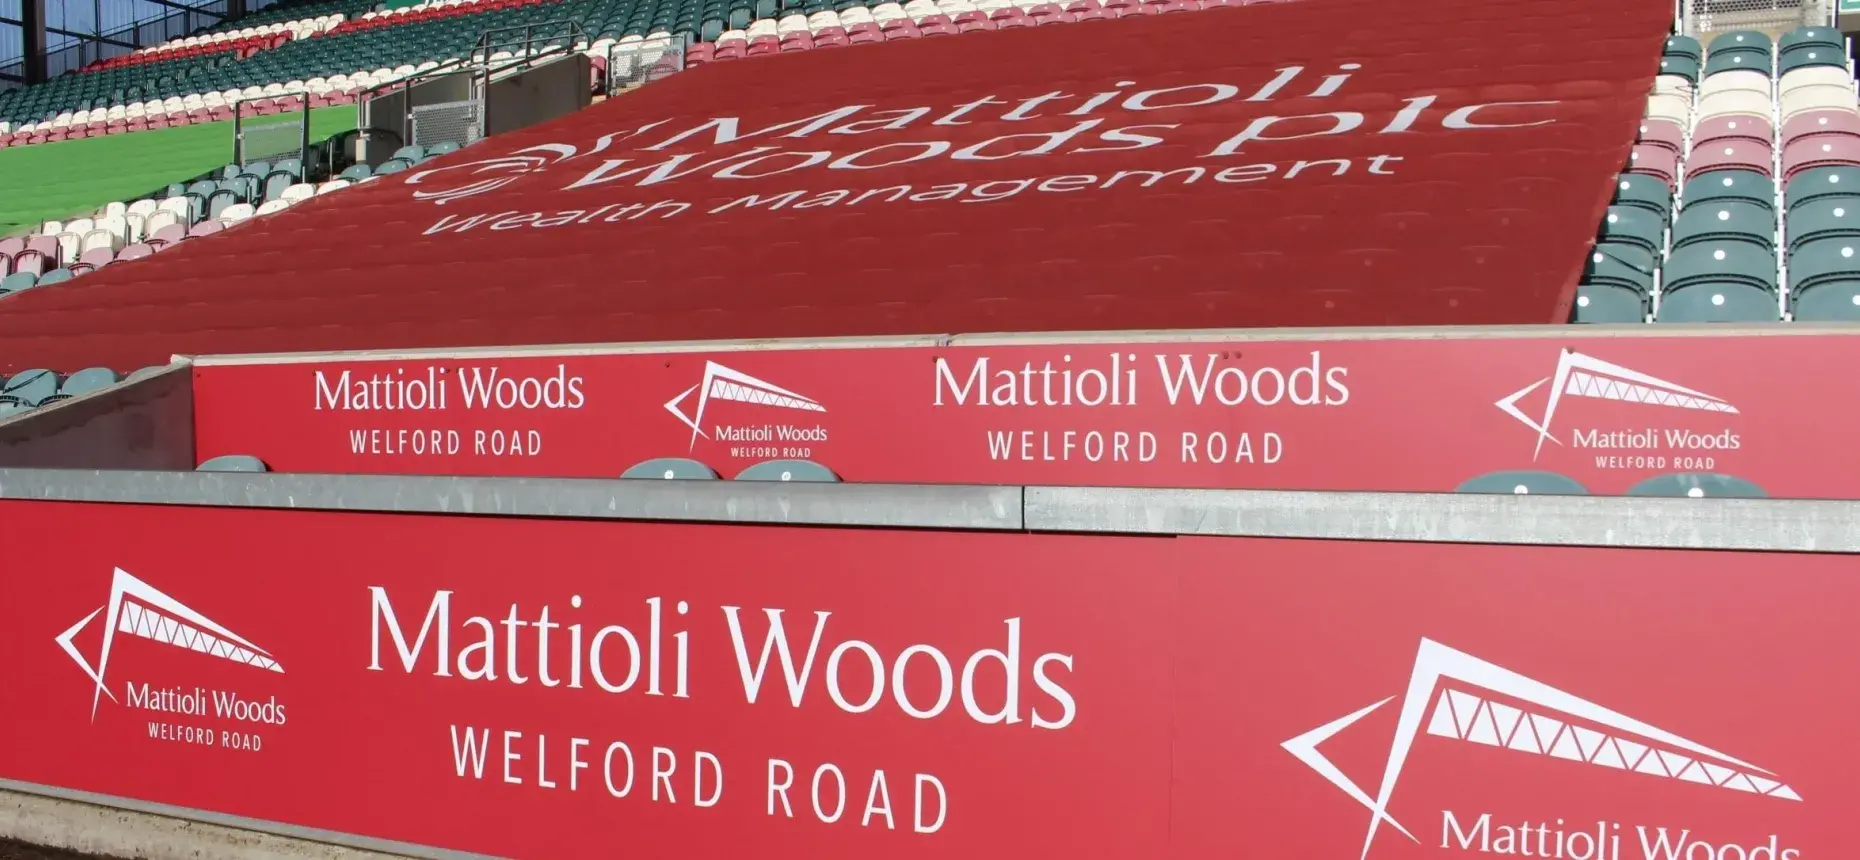 Mattioli Woods Welford road